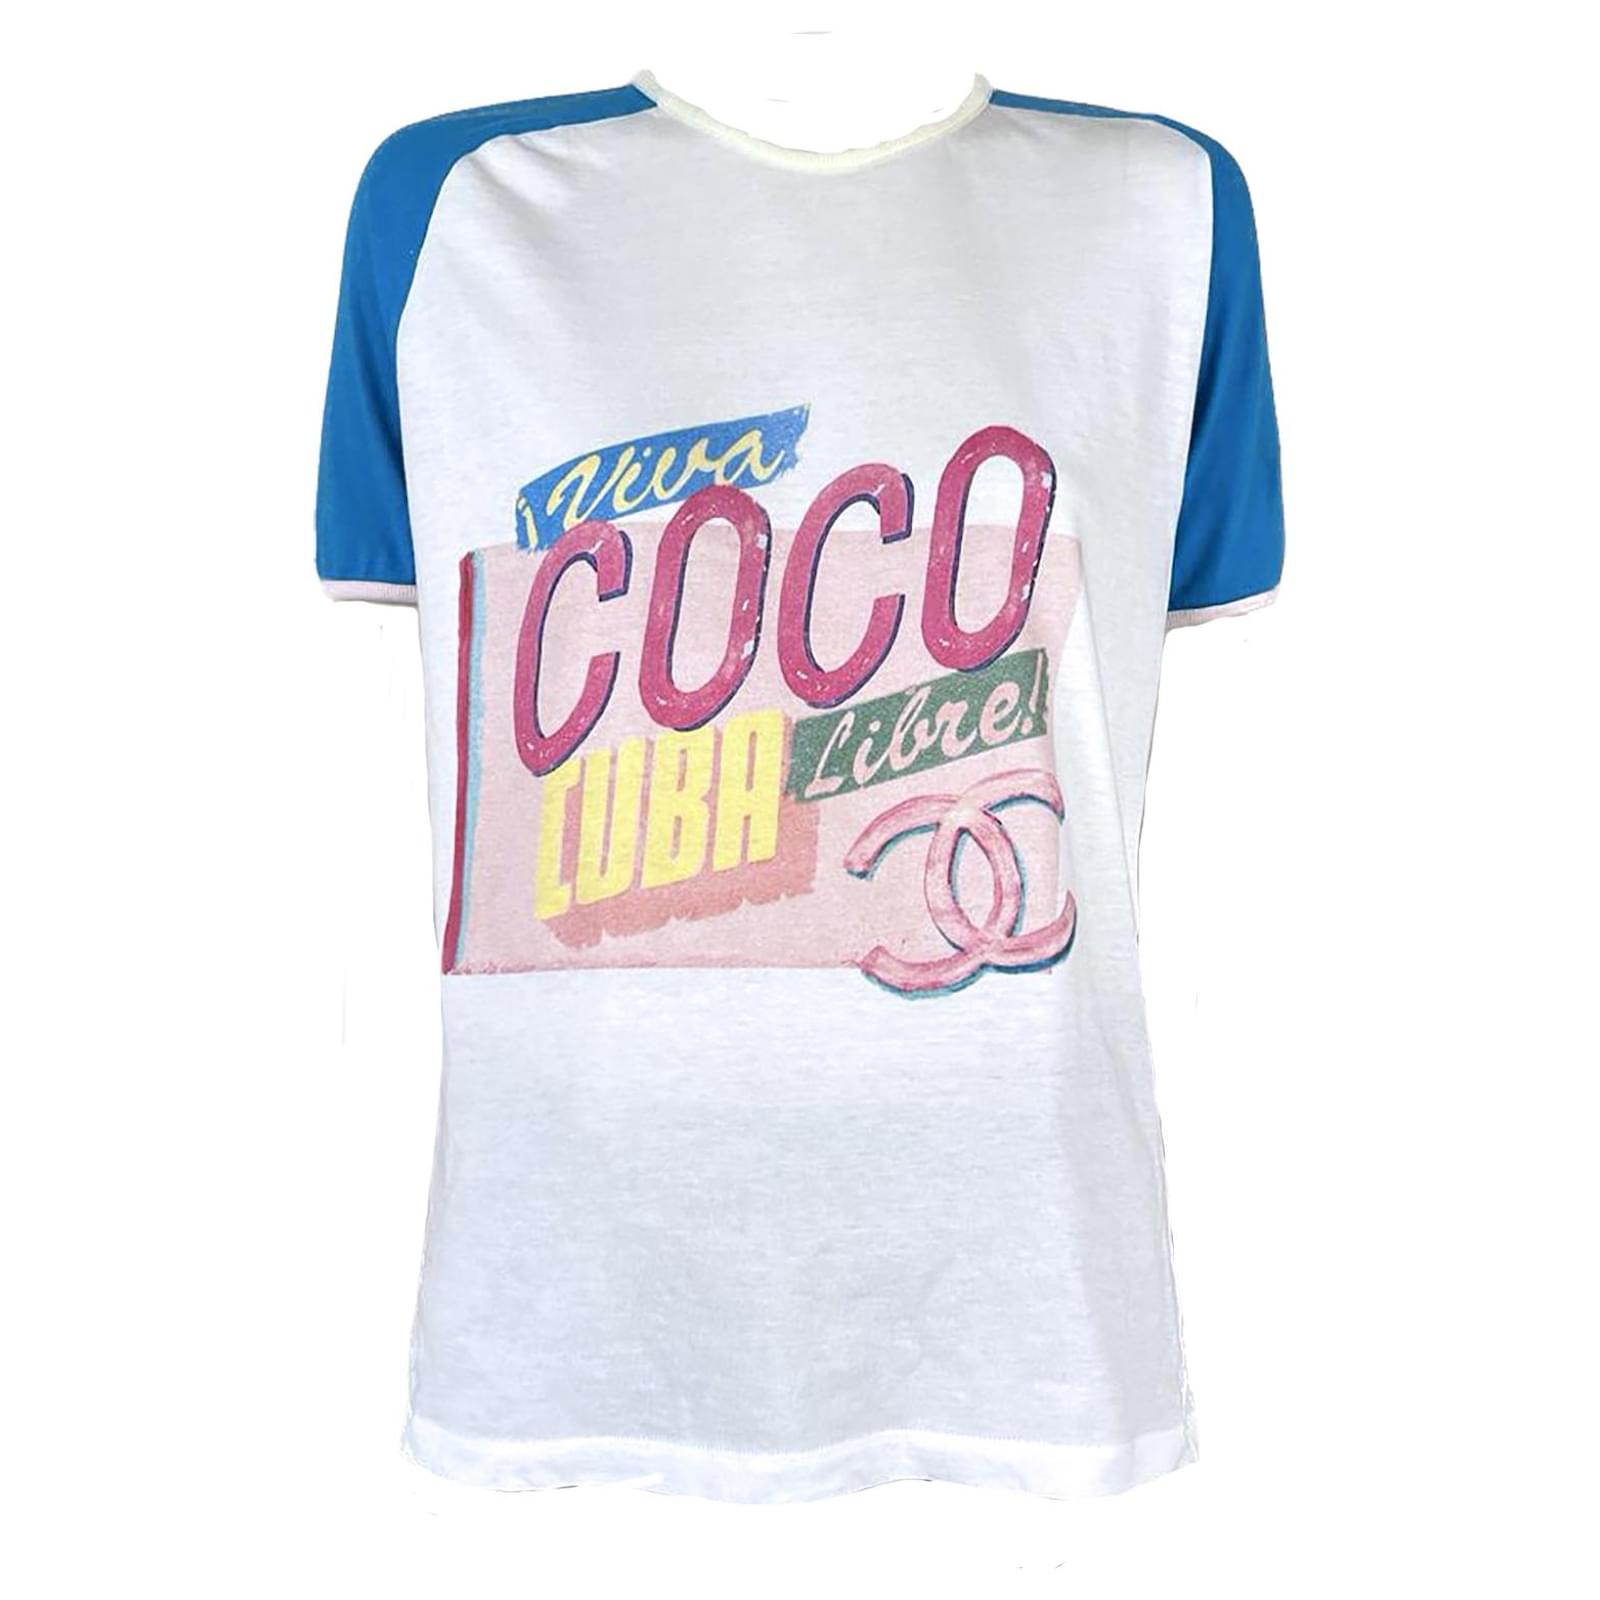 coco chanel shirts for women cc logo